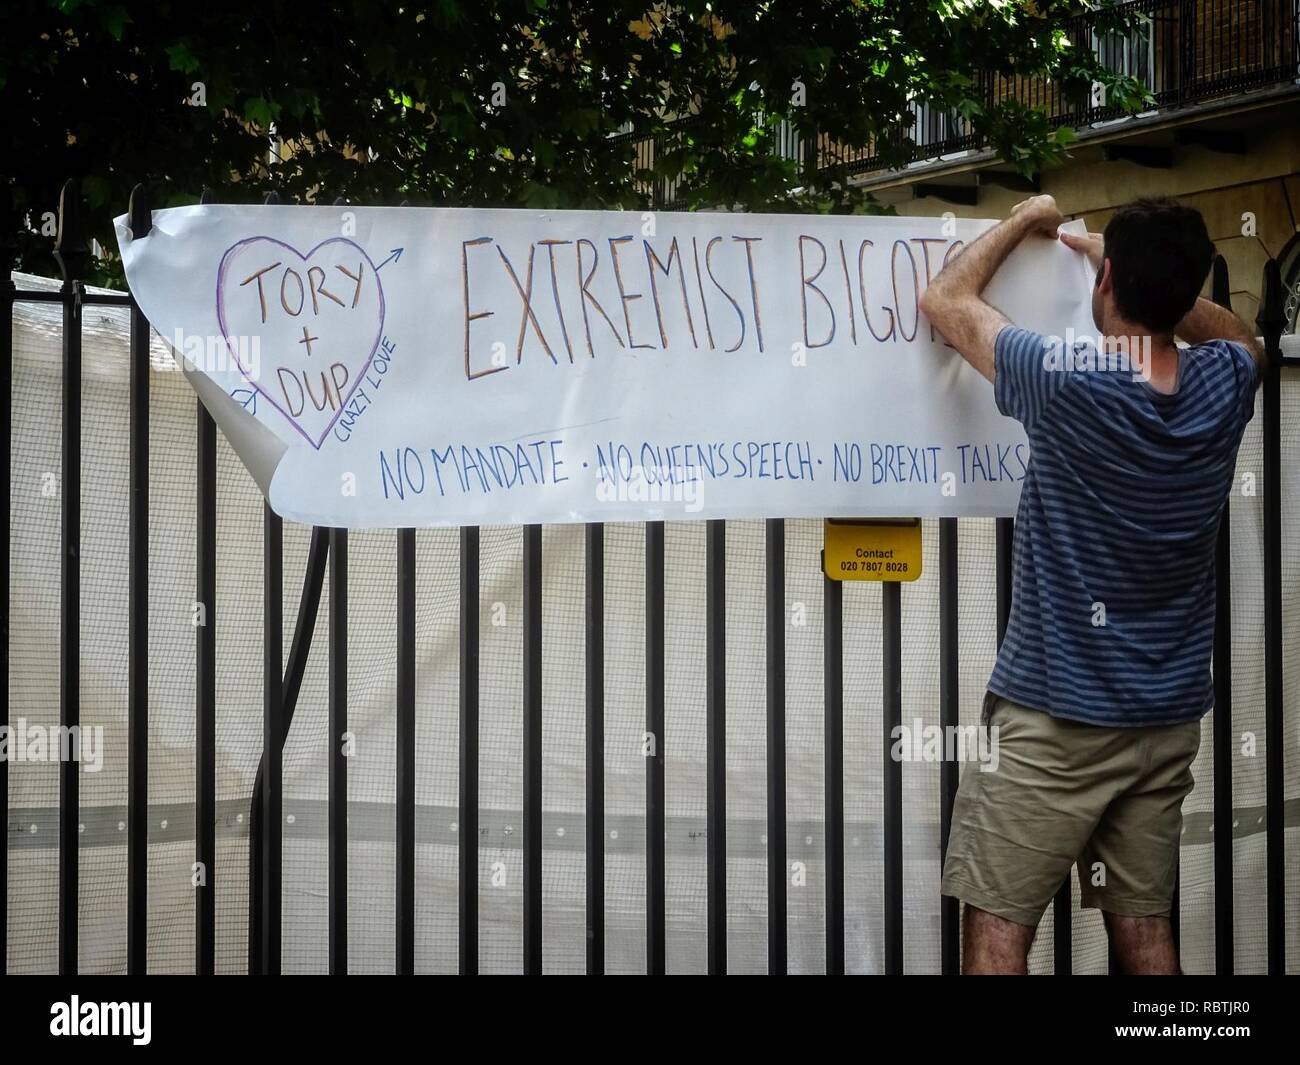 -MayMustGo Extremist Bigots (35198576222). Stock Photo